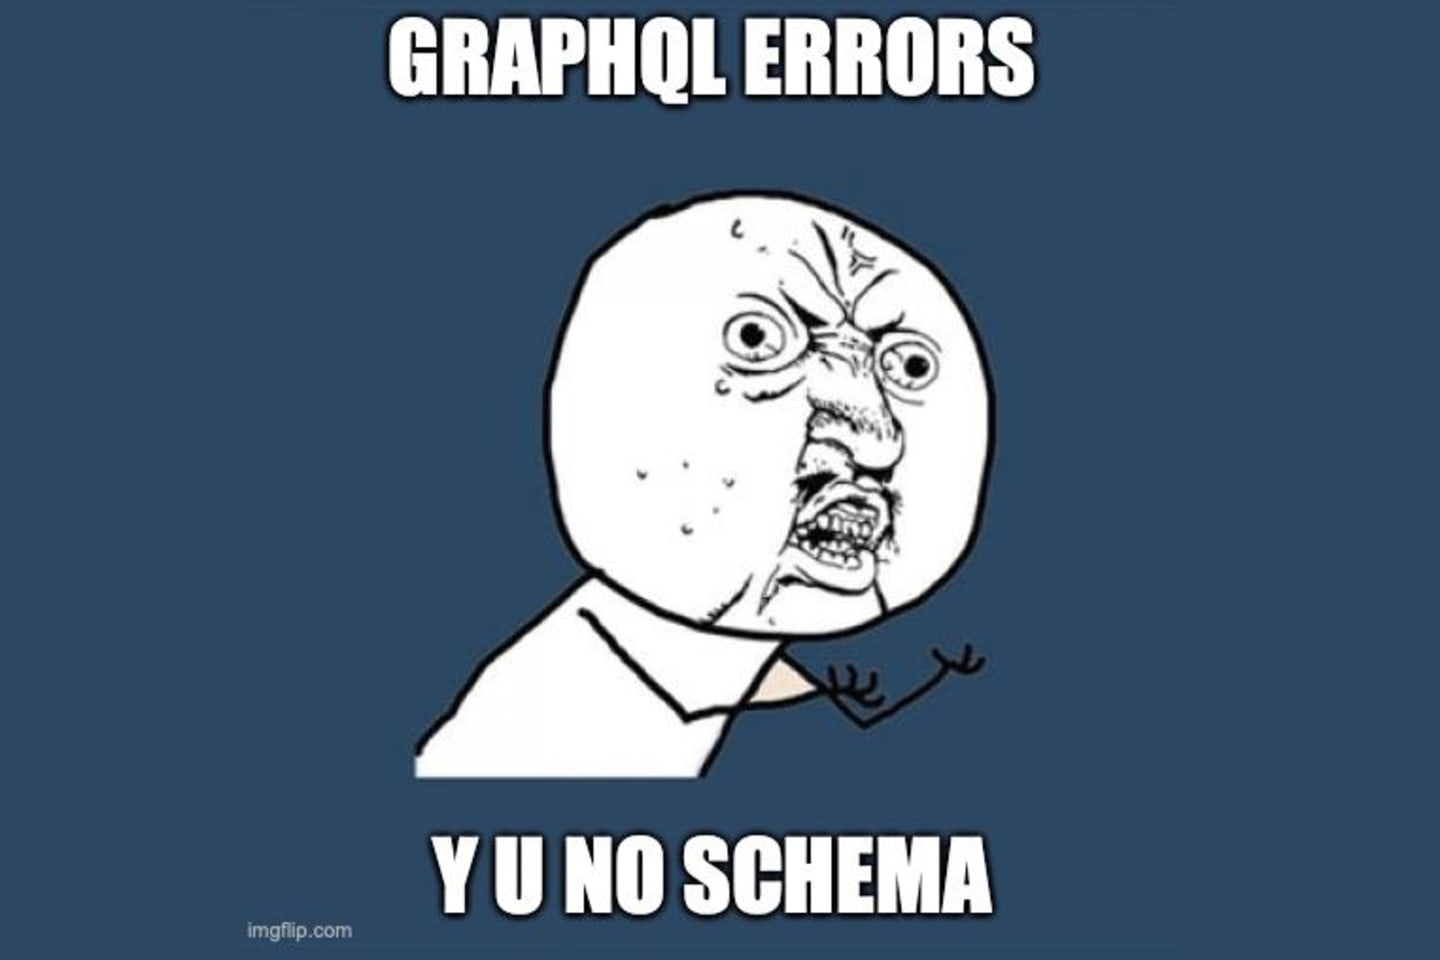 Why you no schema?